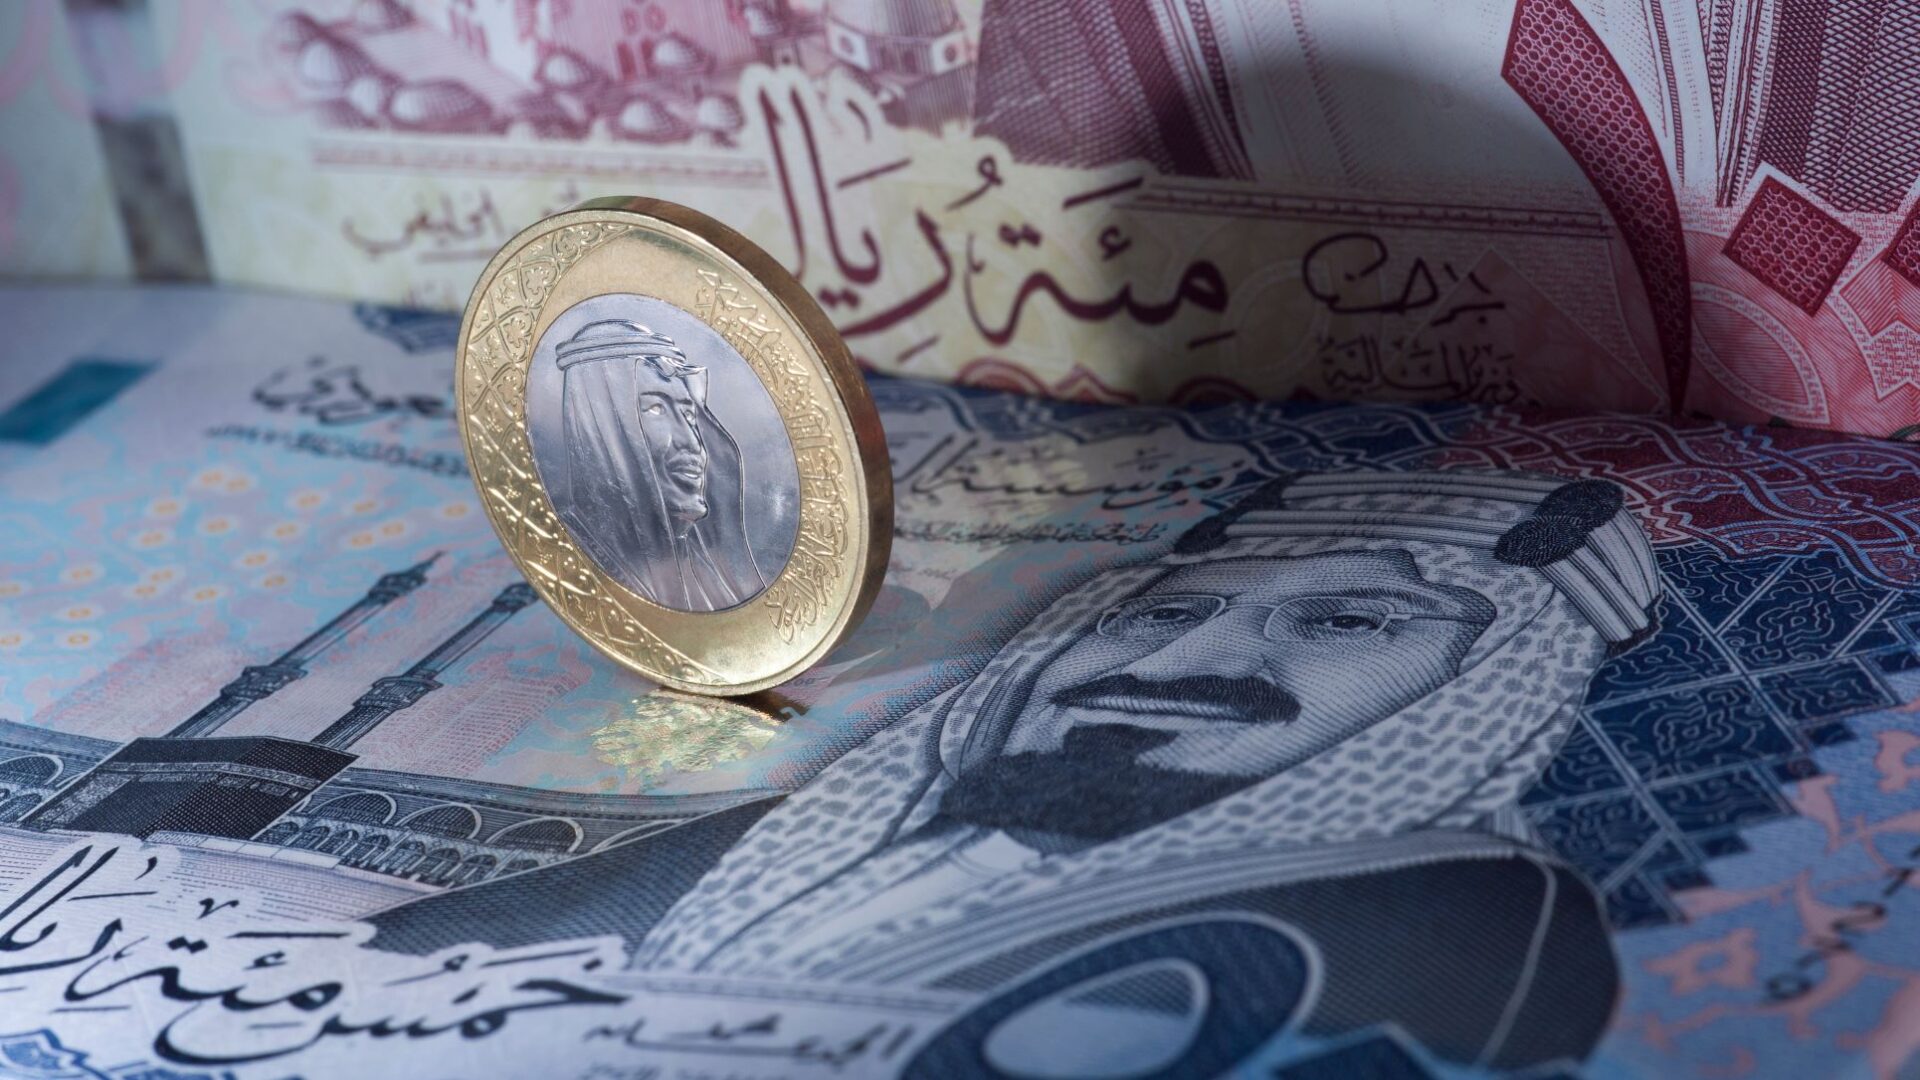 Jadwa Investment revises Saudi Arabia’s 2022 inflation forecast higher